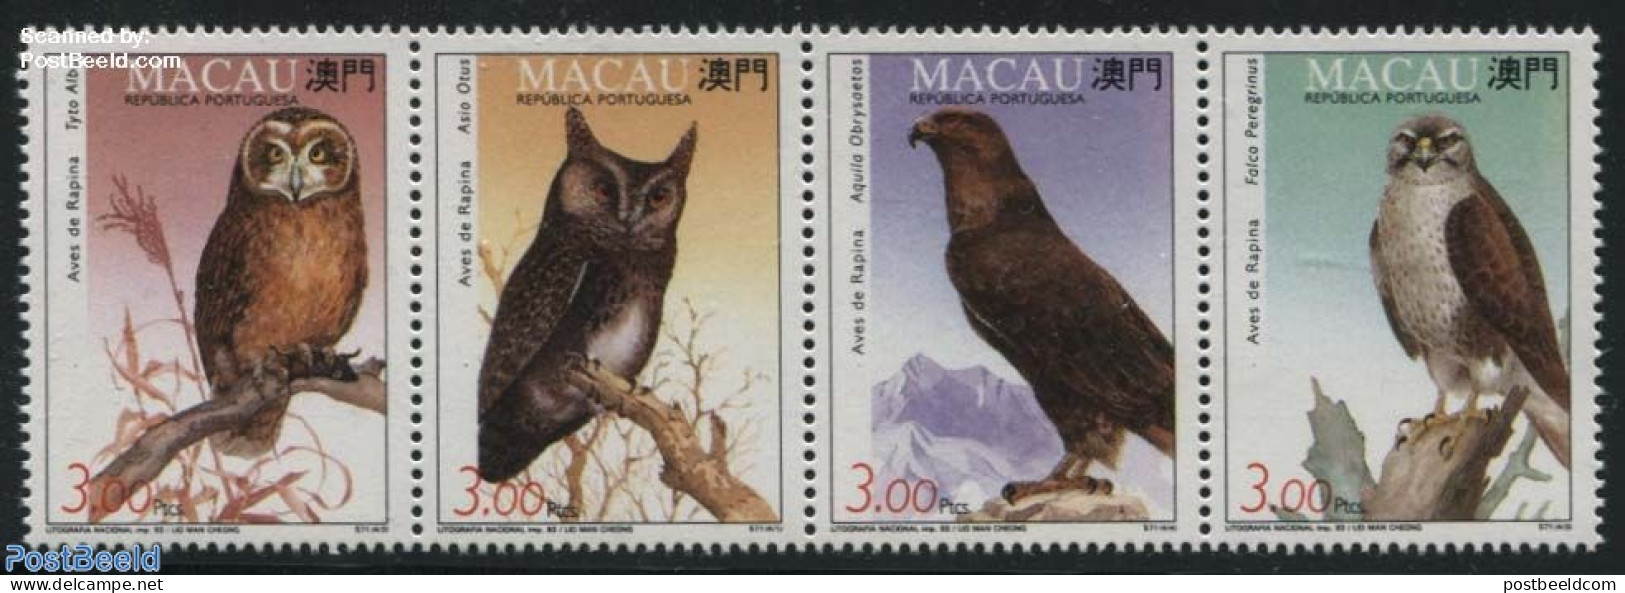 Macao 1993 Birds Of Prey 4v [:::] Or [+], Mint NH, Nature - Birds - Birds Of Prey - Owls - Neufs